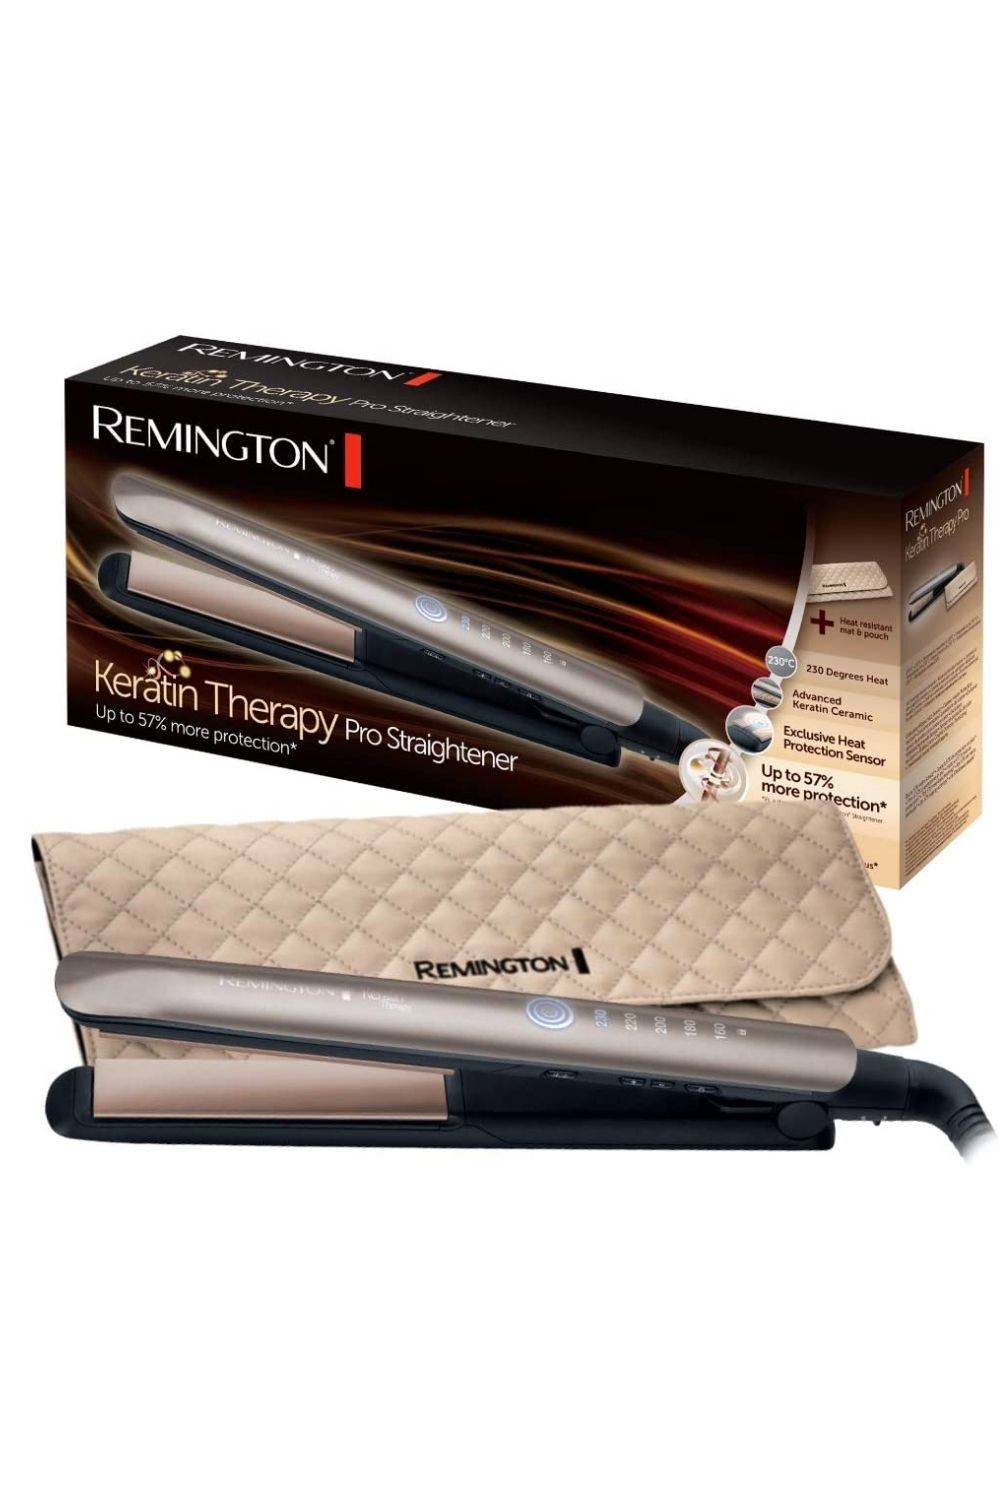 Remington Plancha de Pelo Profesional Keratin Therapy Pro - Cerámica, Queratina, Aceite Almendras, Digital, 5 Ajustes Temperatura, Bronce - S8590